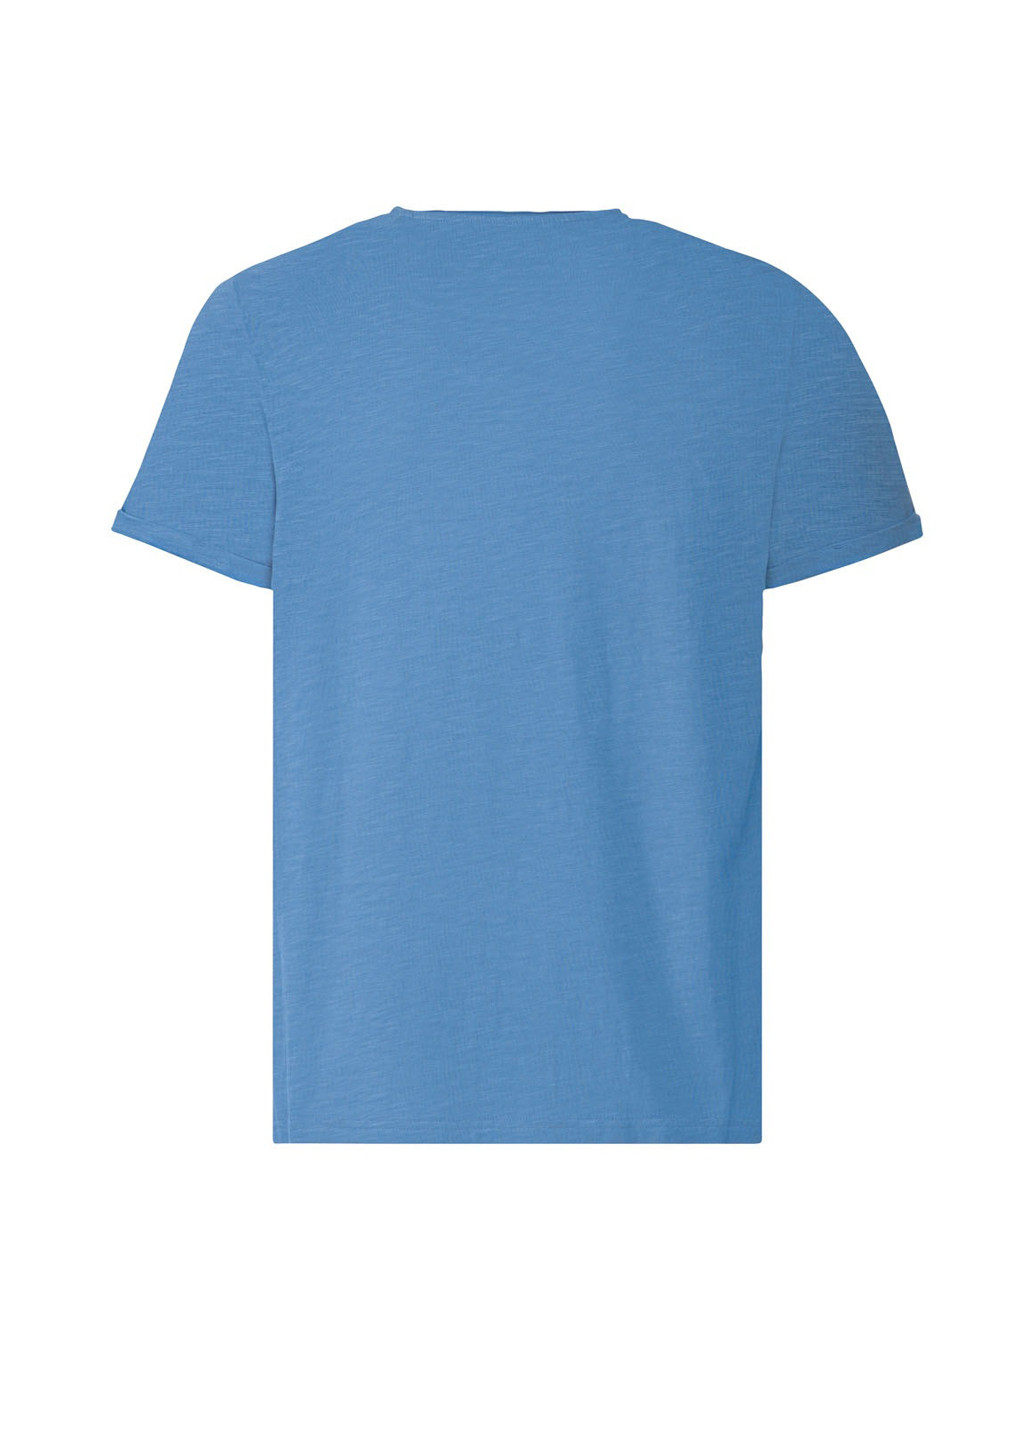 Голубая футболка Livergy